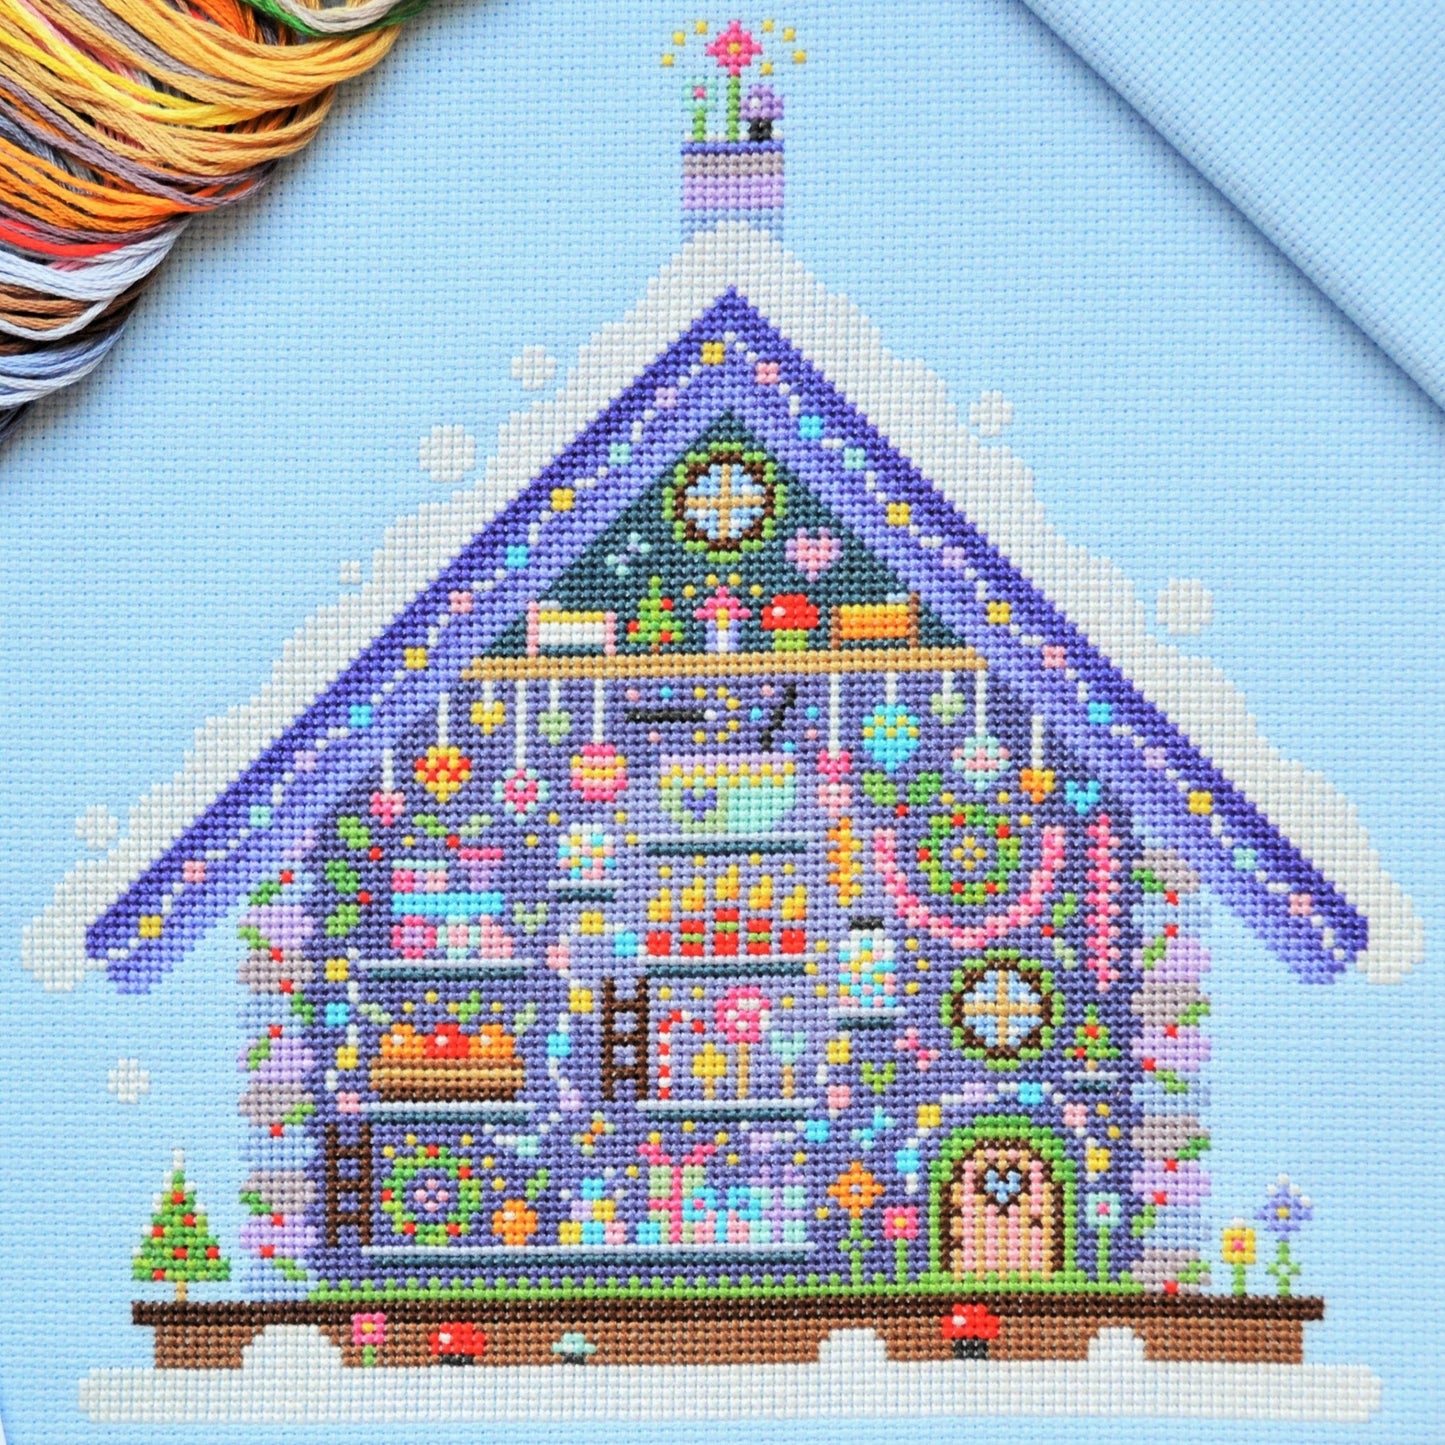 Bundle Offer: Seasonal Houses 2 Cross Stitch Kits